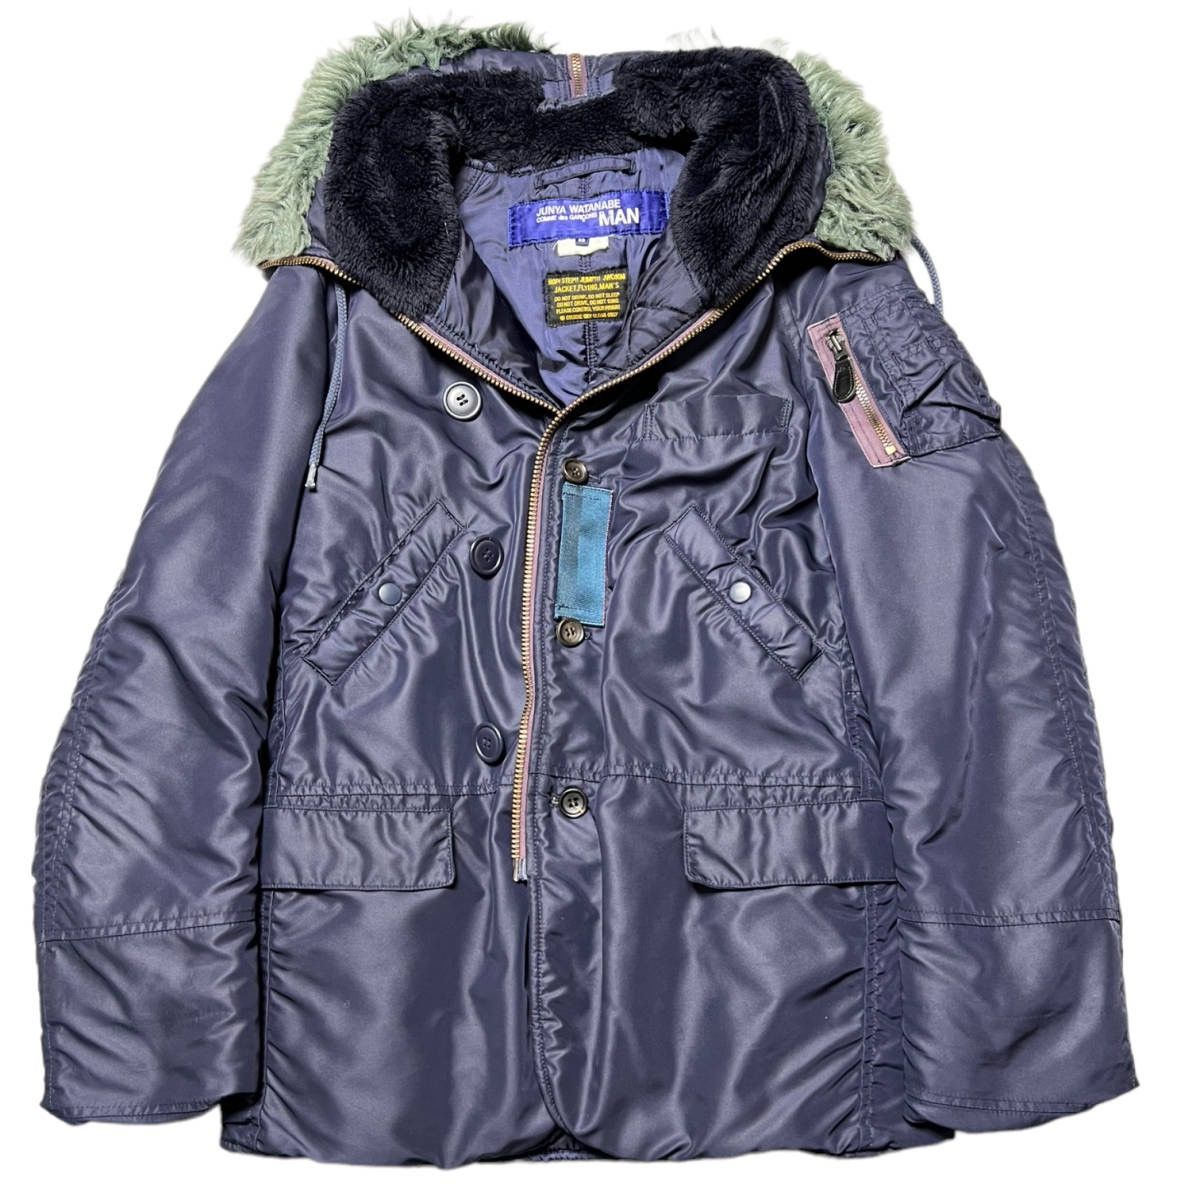 Junya Watanabe AW2006 N-3B Winter Jacket Size US M / EU 48-50 / 2 - 2 Preview